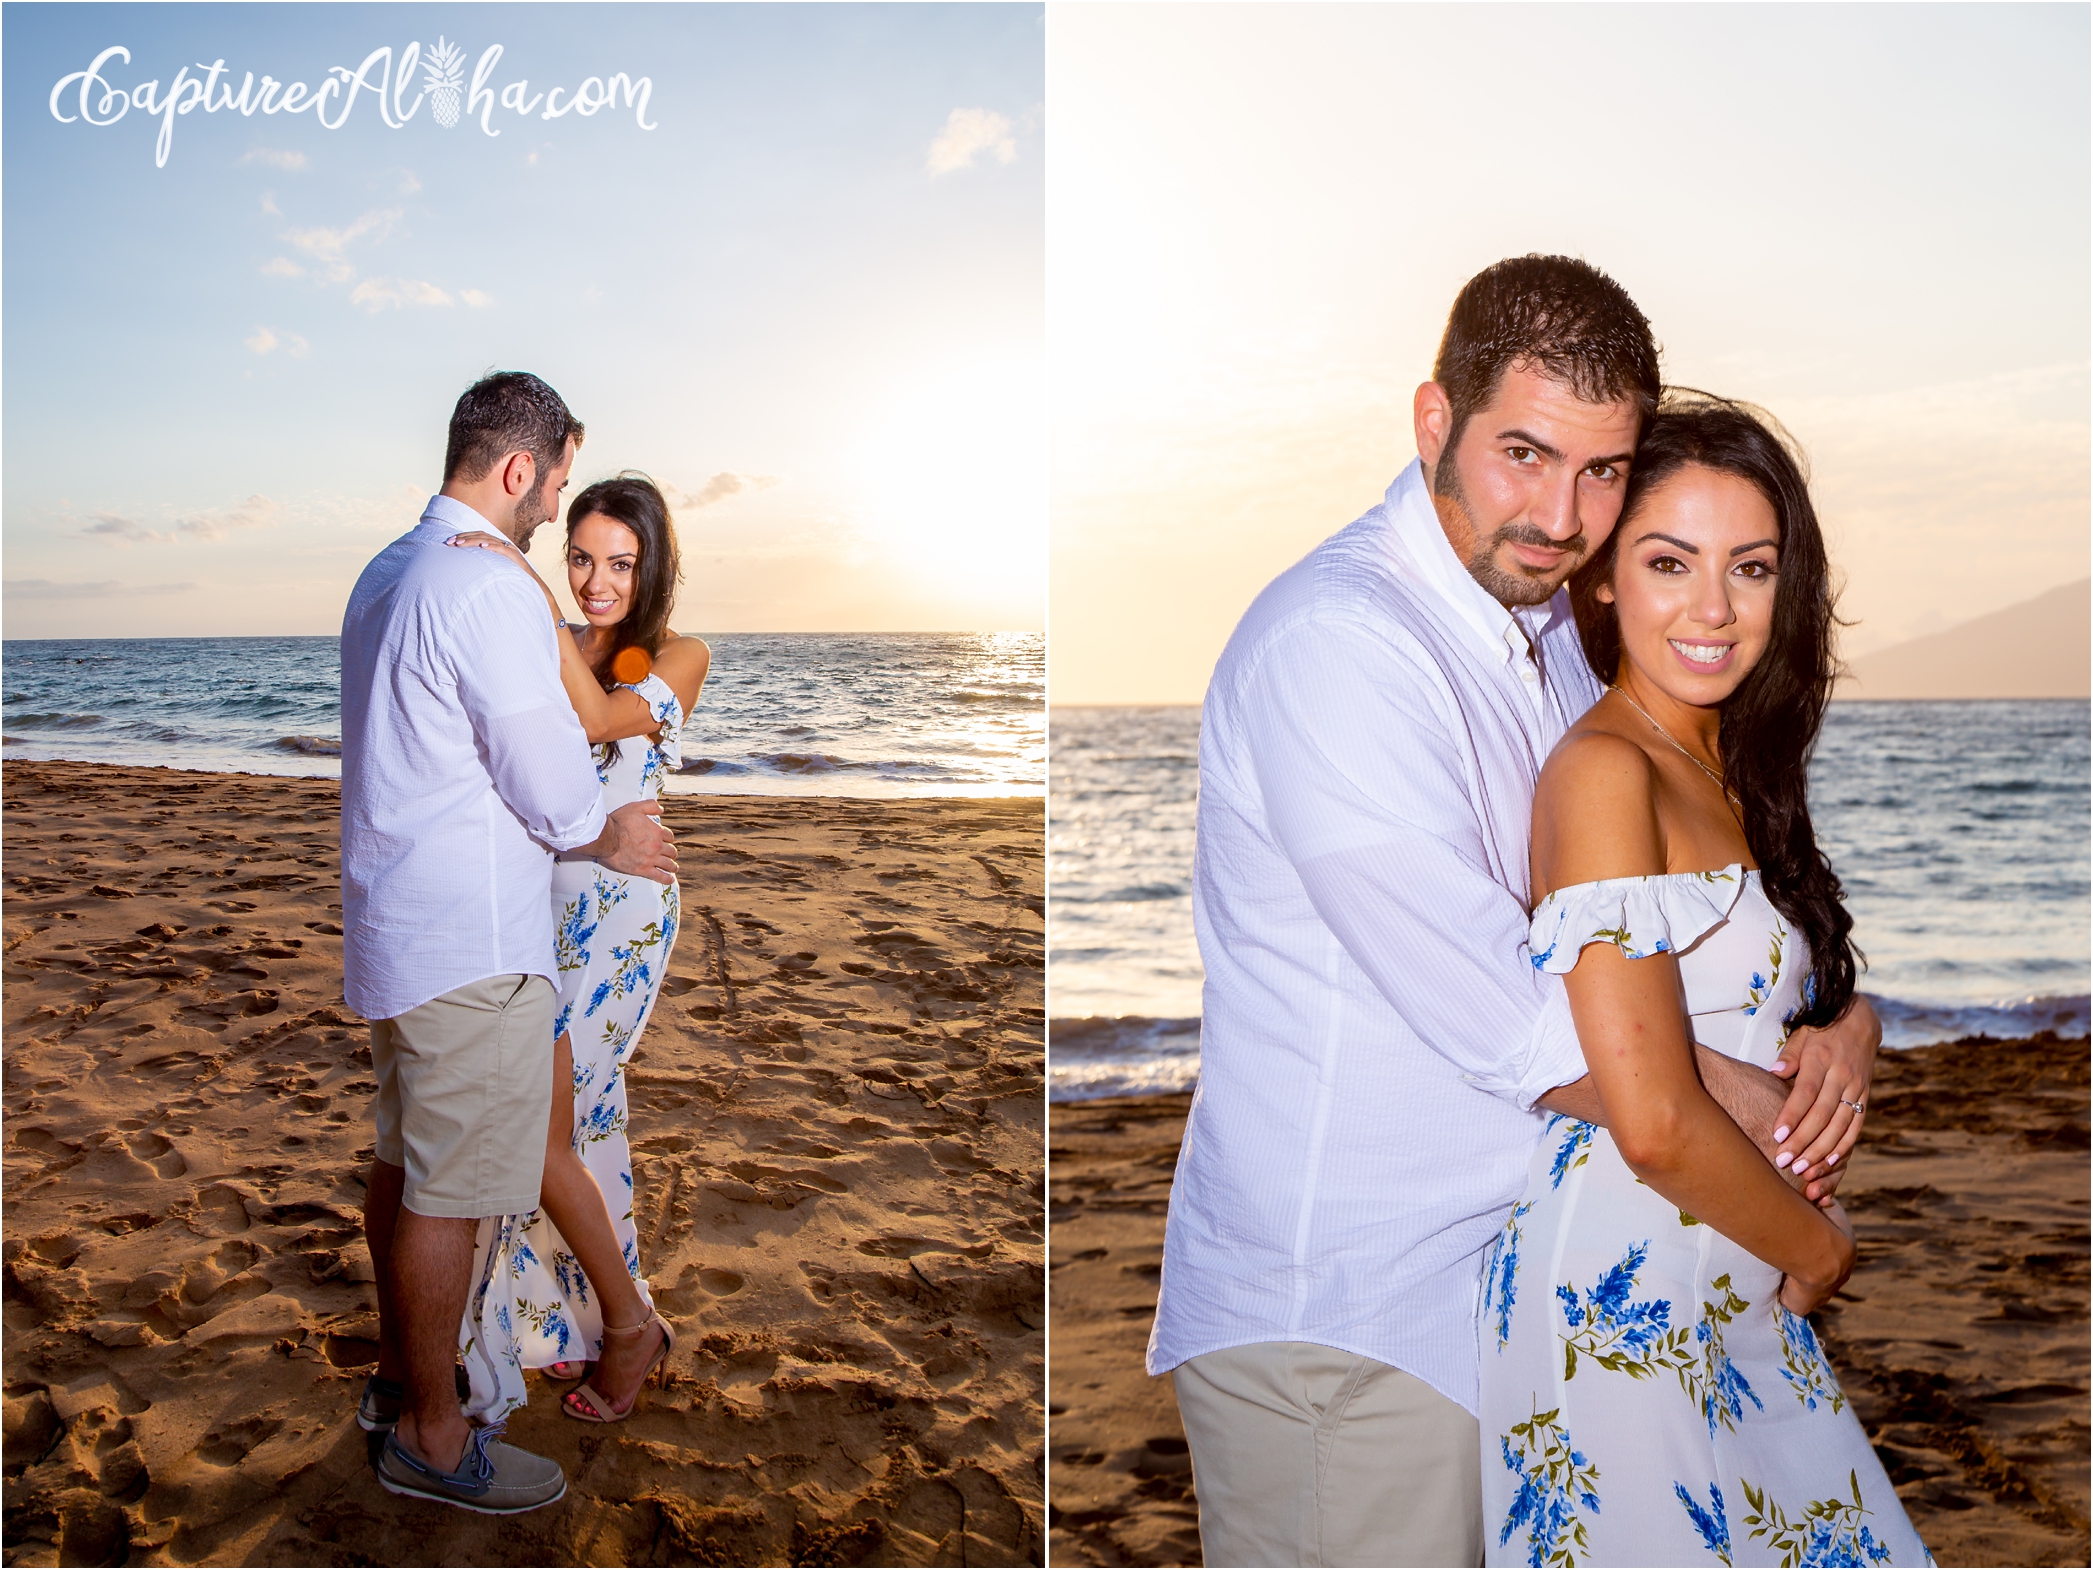 Maui Engagement Photographer capturing a surprise proposal at Mokapu Beach in Maui